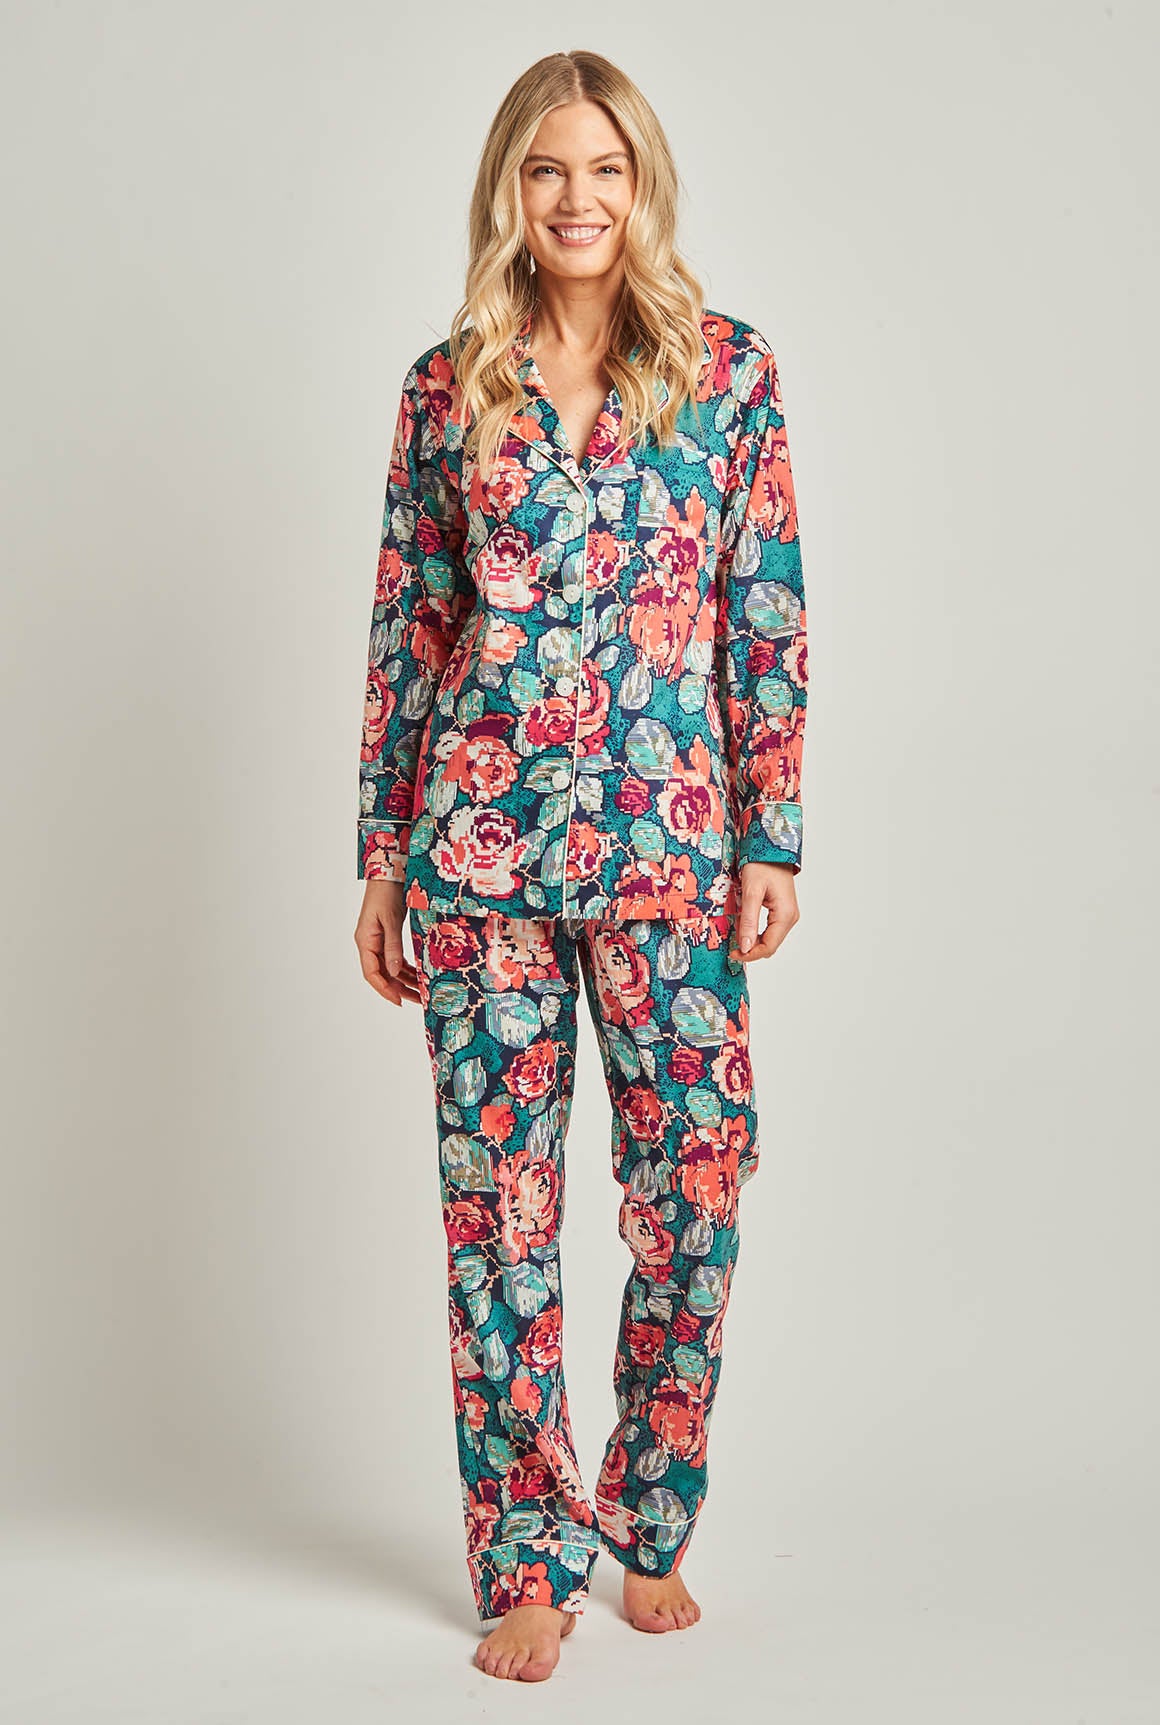 Cotton Women's Designer Sleepwear - Cotton Pyjamas Coral